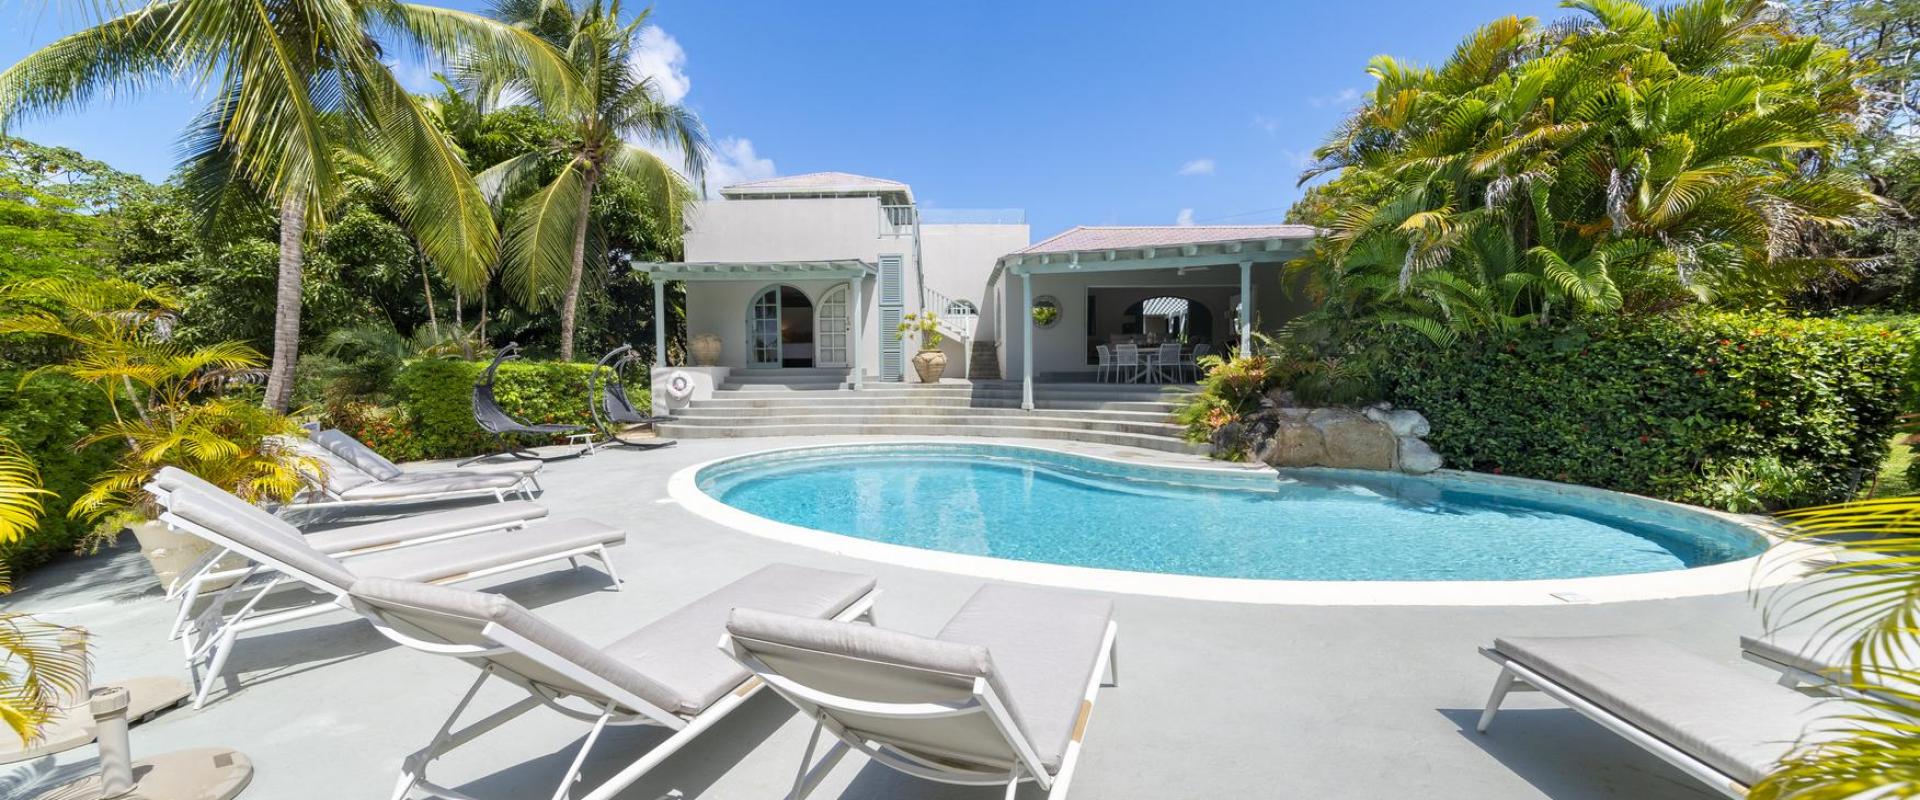 Phoenix Villa Sandy Lane Barbados Swimming Pool and Lounge Chairs